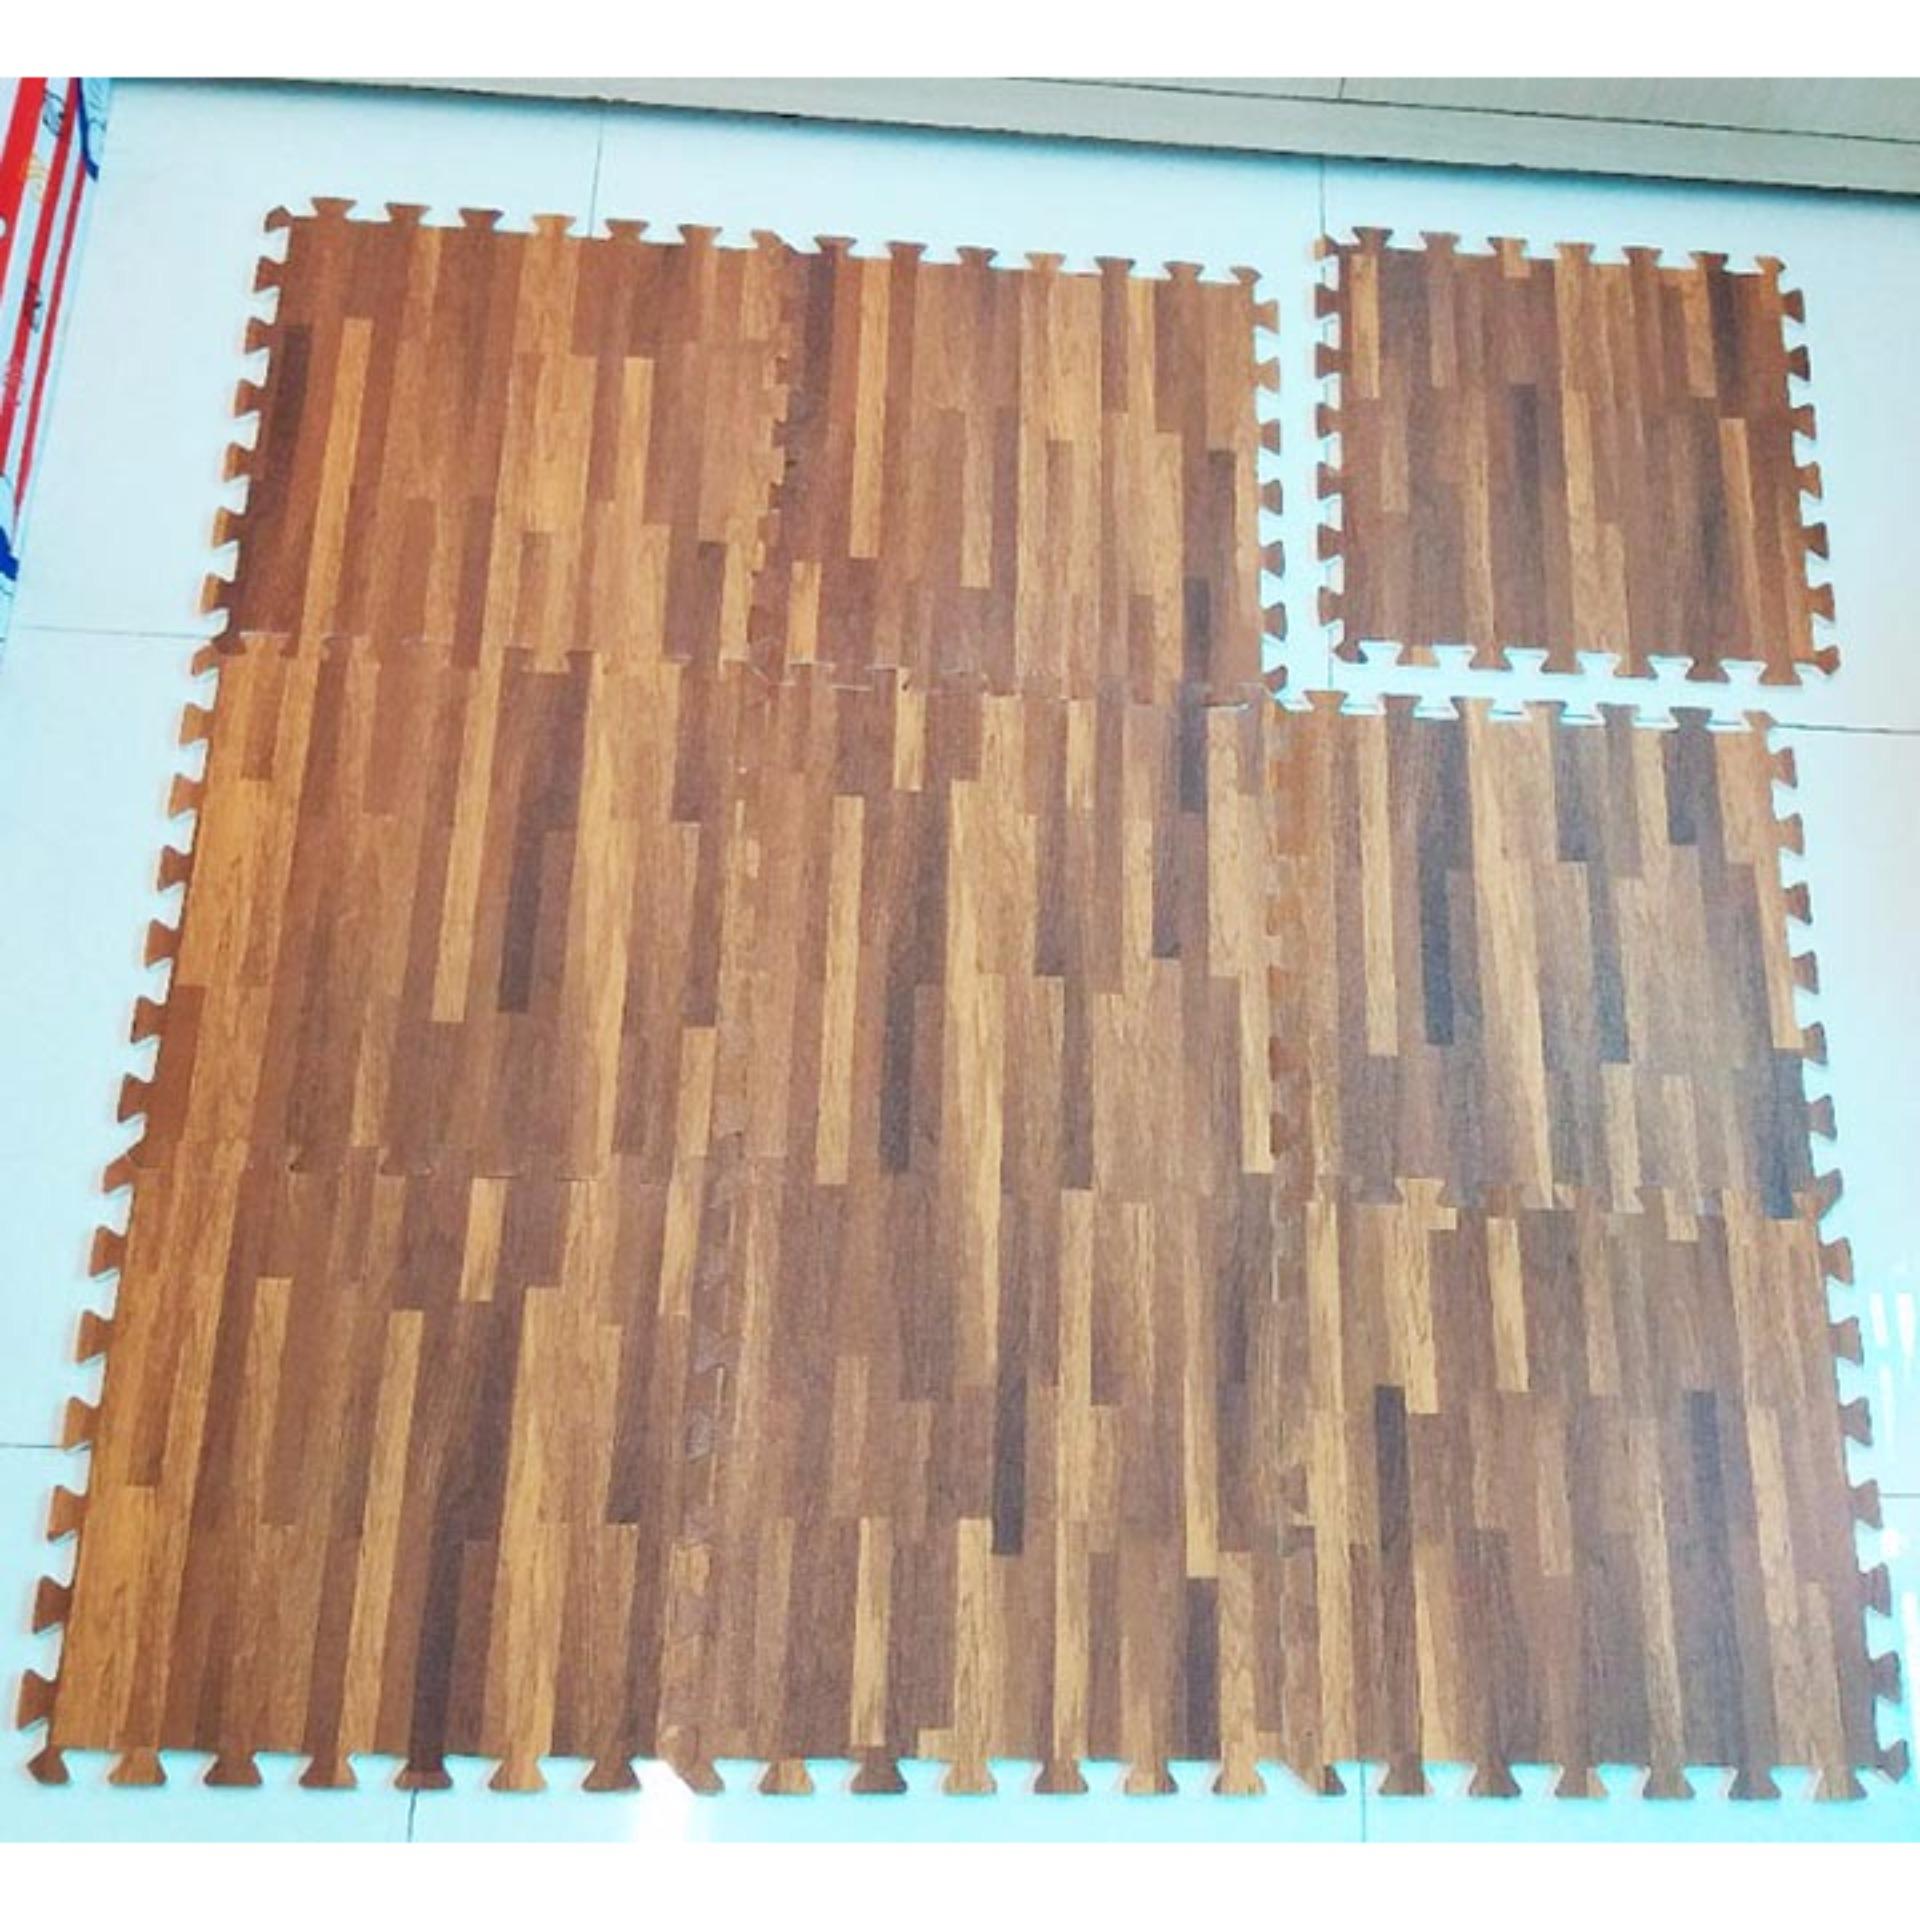 Bộ thảm xốp van gỗ 4 tấm 60x60cm | Lazada.vn